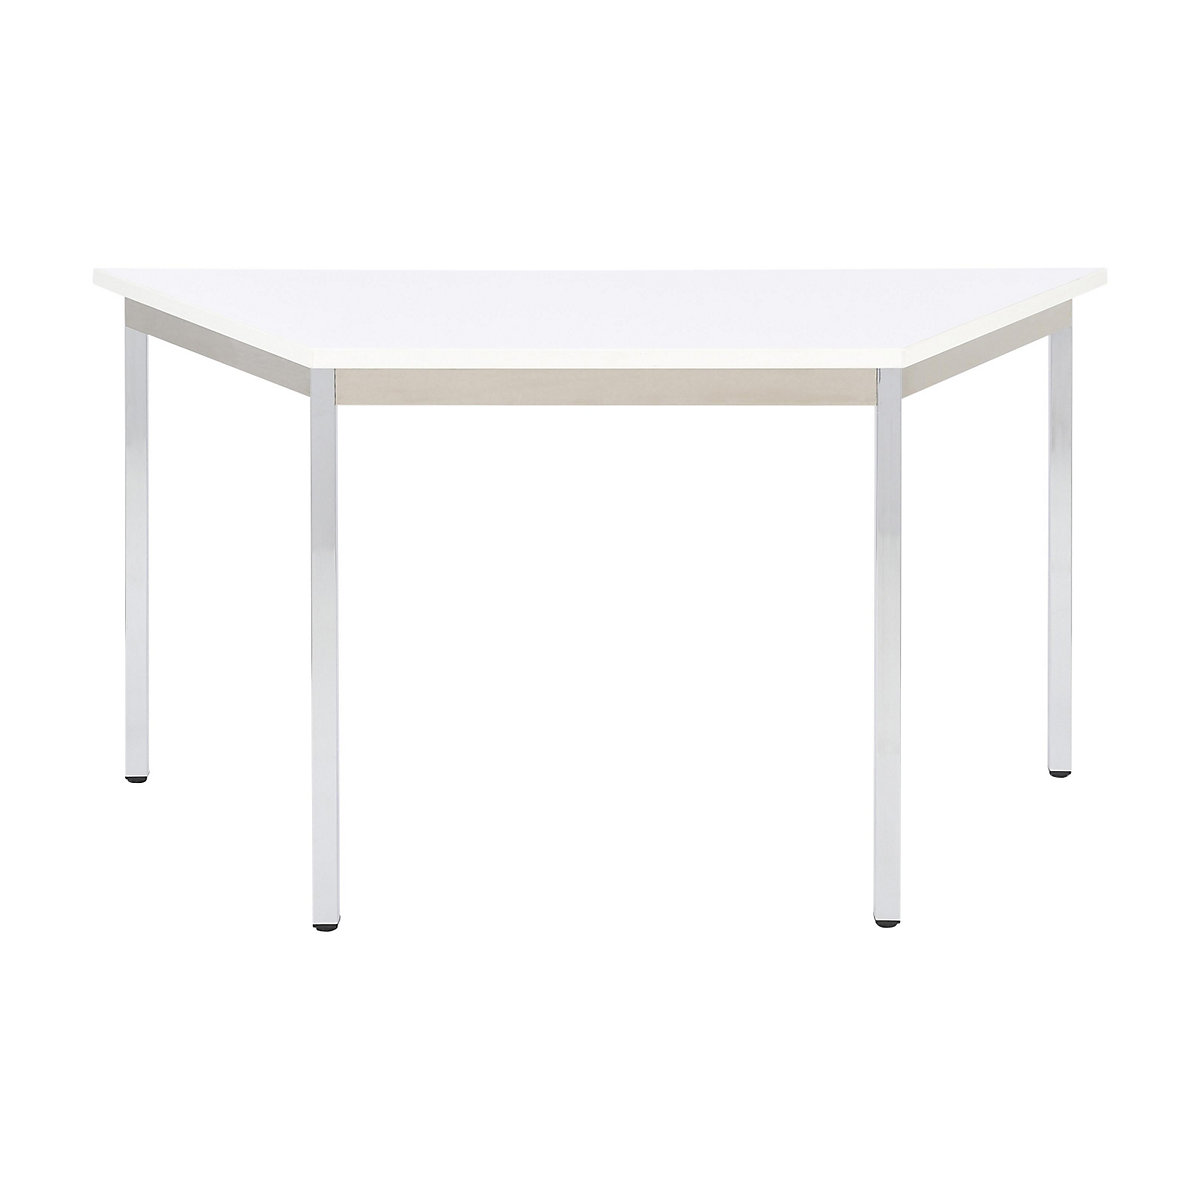 Universele tafel – eurokraft basic, trapeziumvormig, h x b x d = 740 x 1200 x 600 mm, blad wit, frame verchroomd